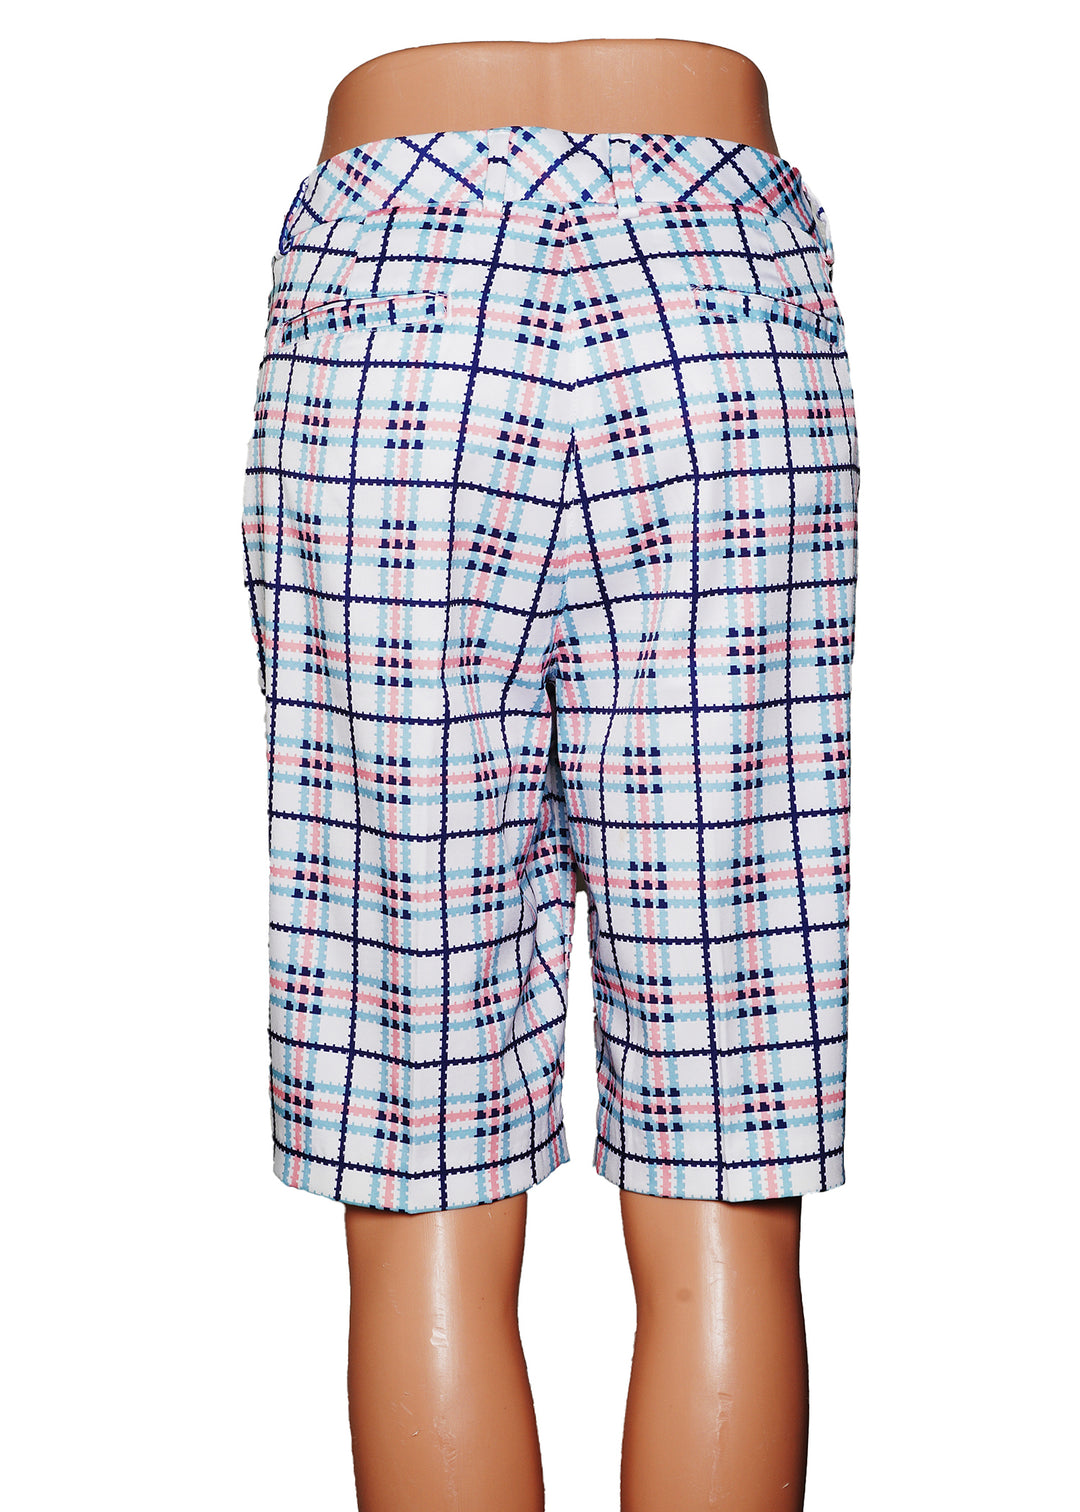 Greg Norman Bermuda Shorts -  White  - Size 6 - Skorzie